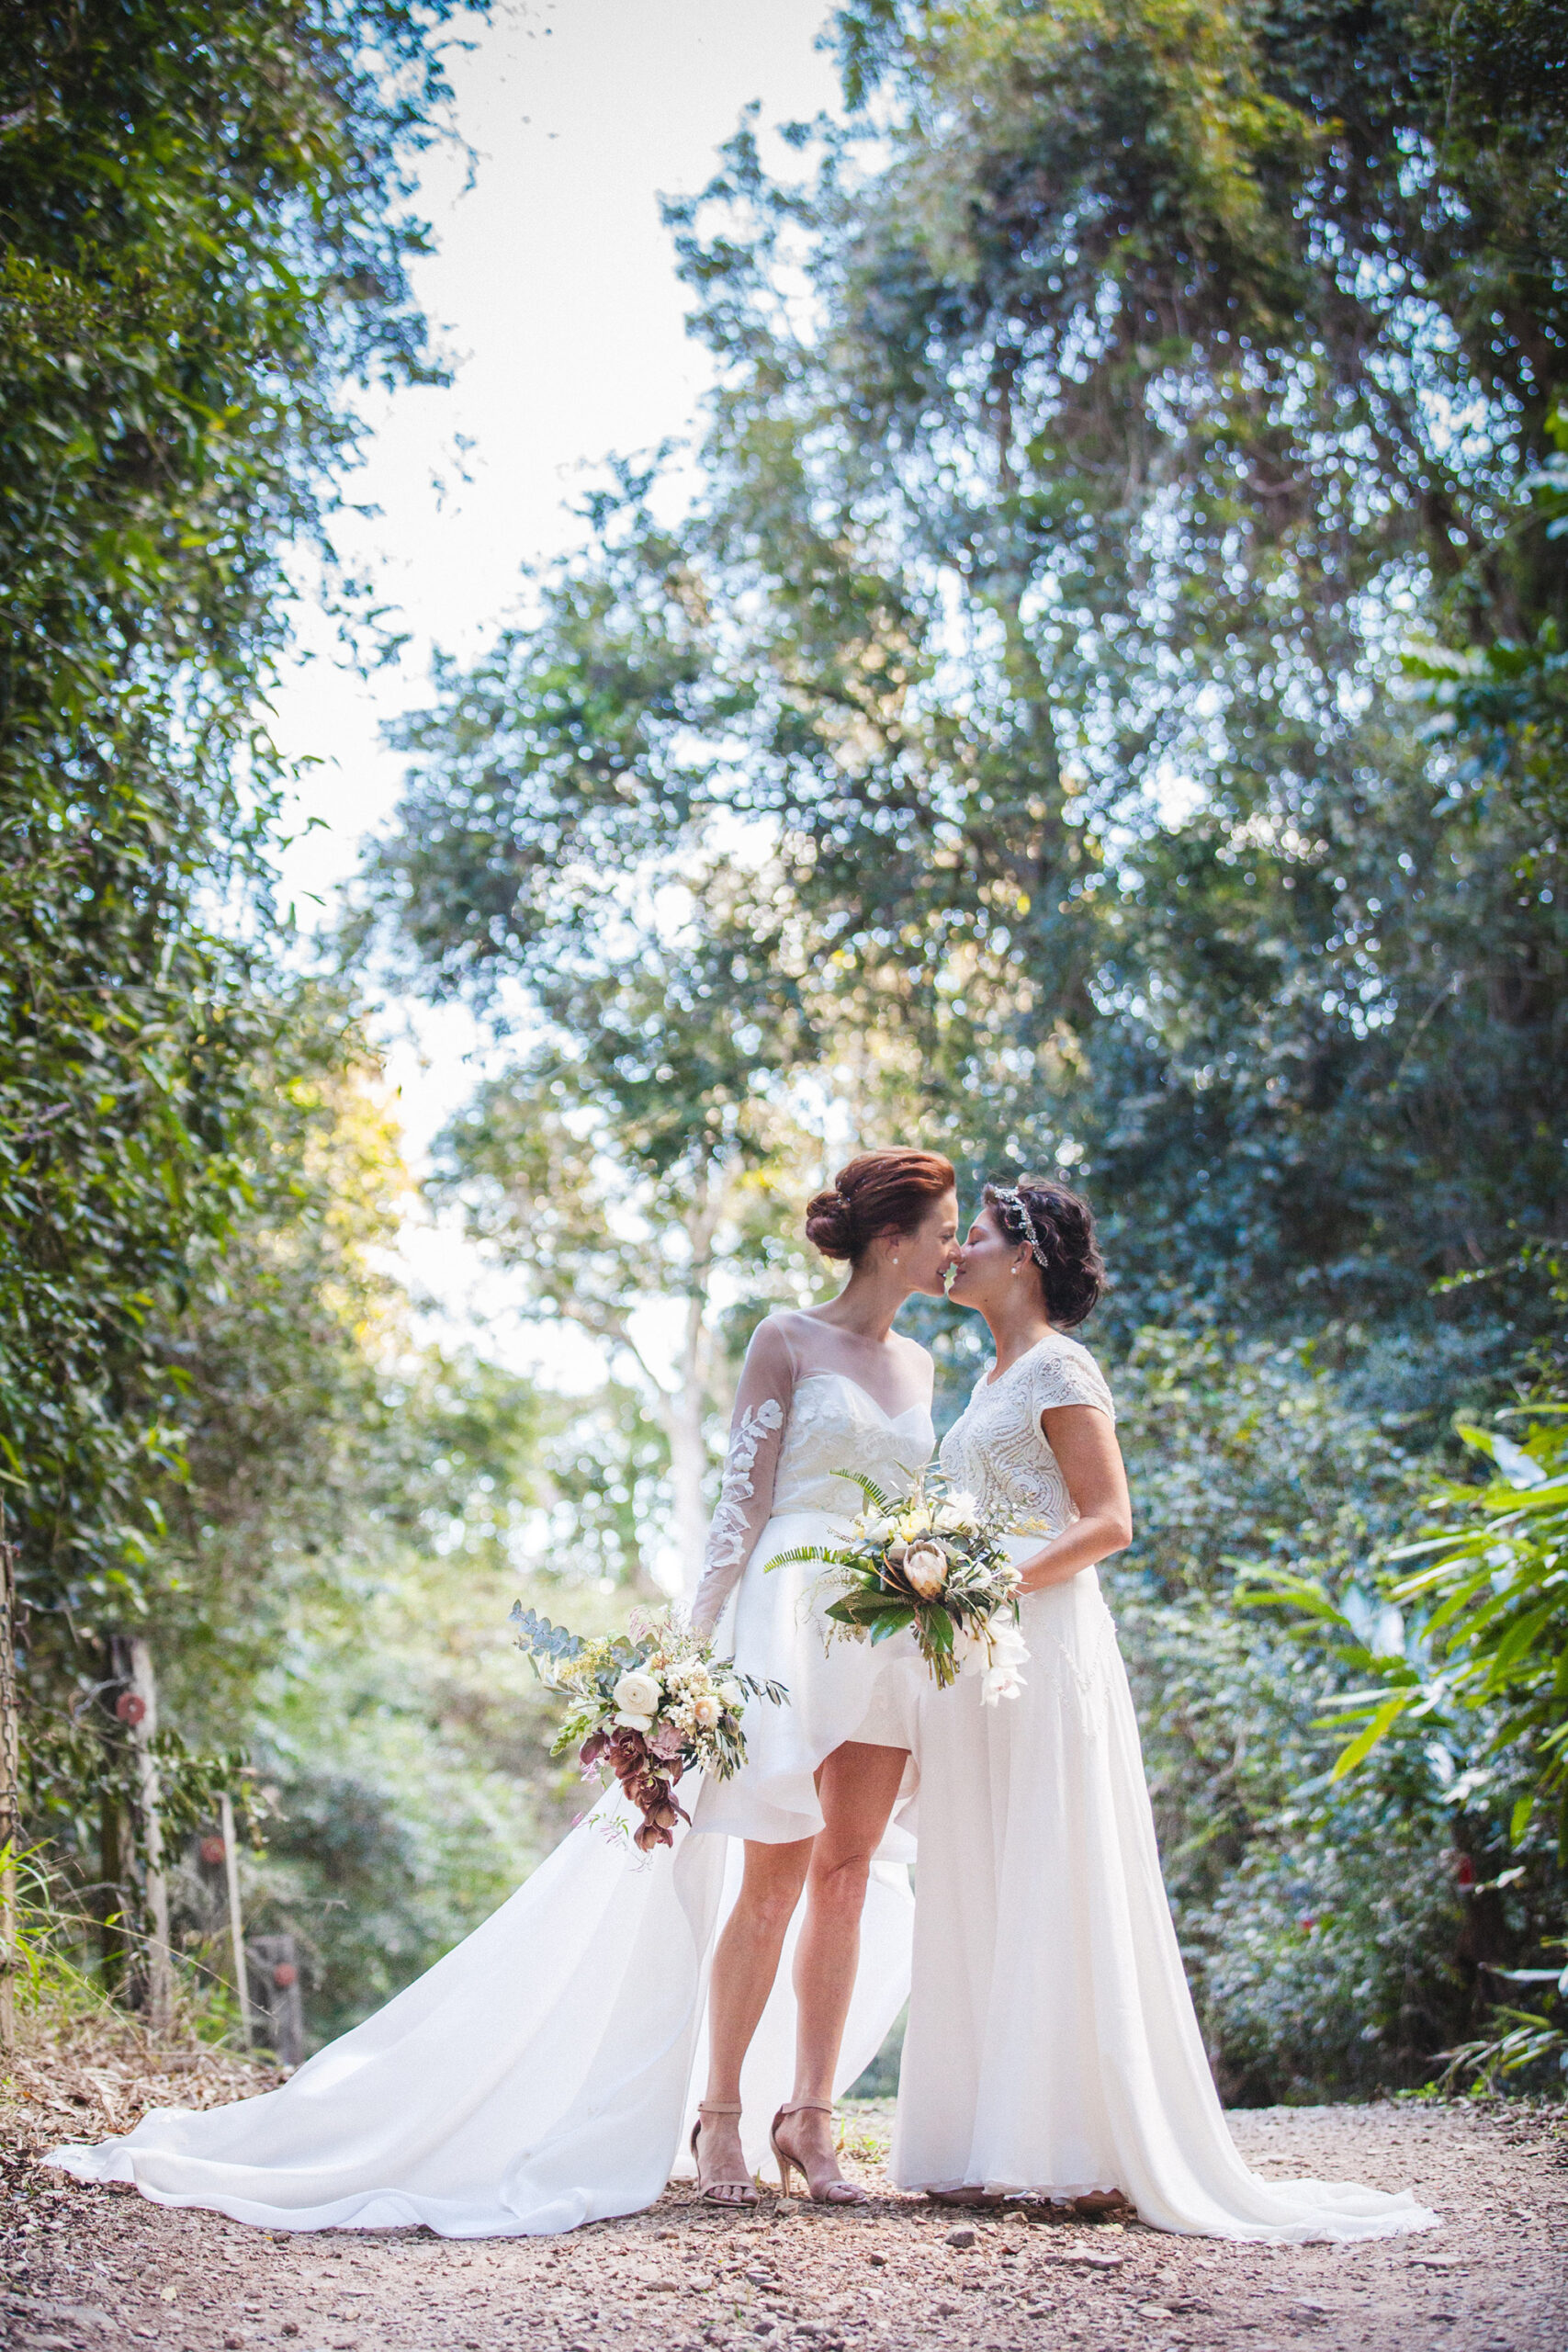 Cara_Sophie_Luxe-Rustic-Wedding_SBS_018